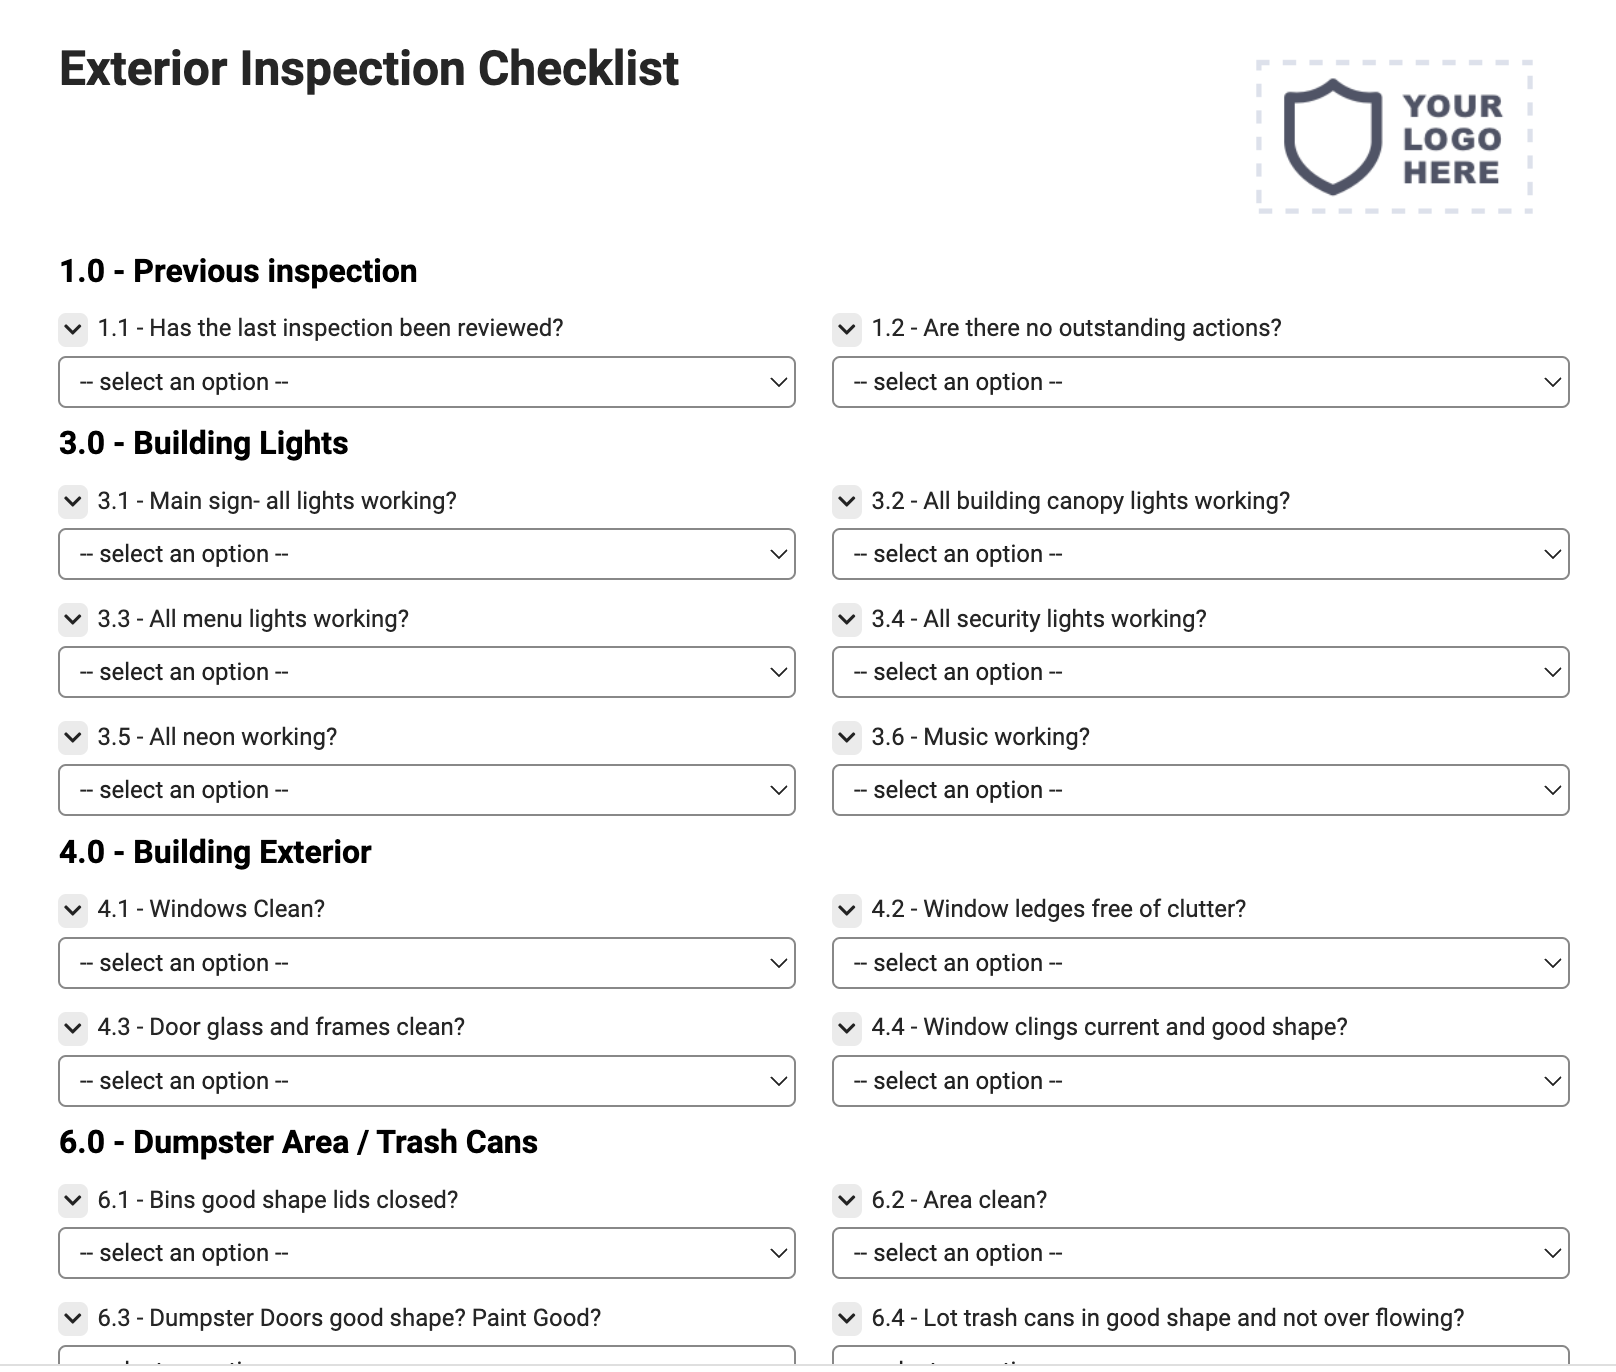 Exterior Inspection Checklist